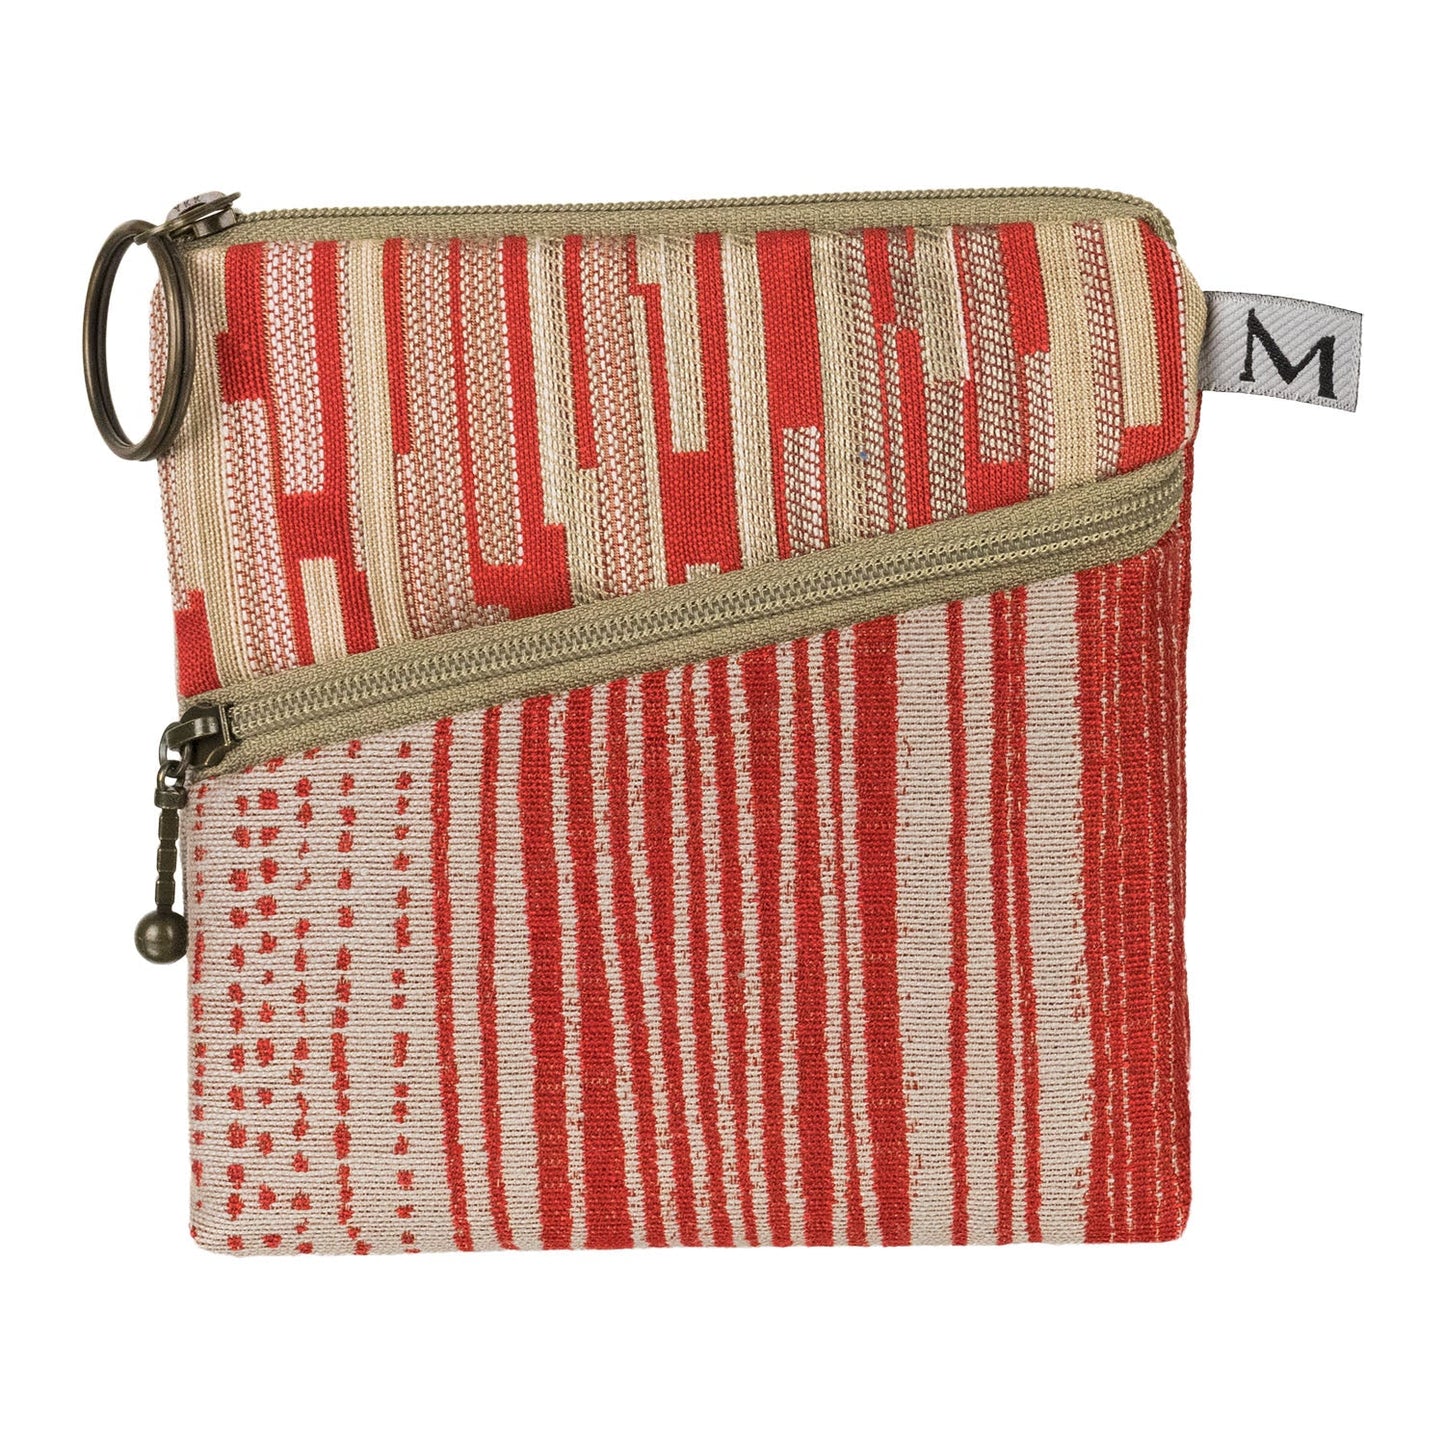 Roo-Tasche, Mod Stripe Red